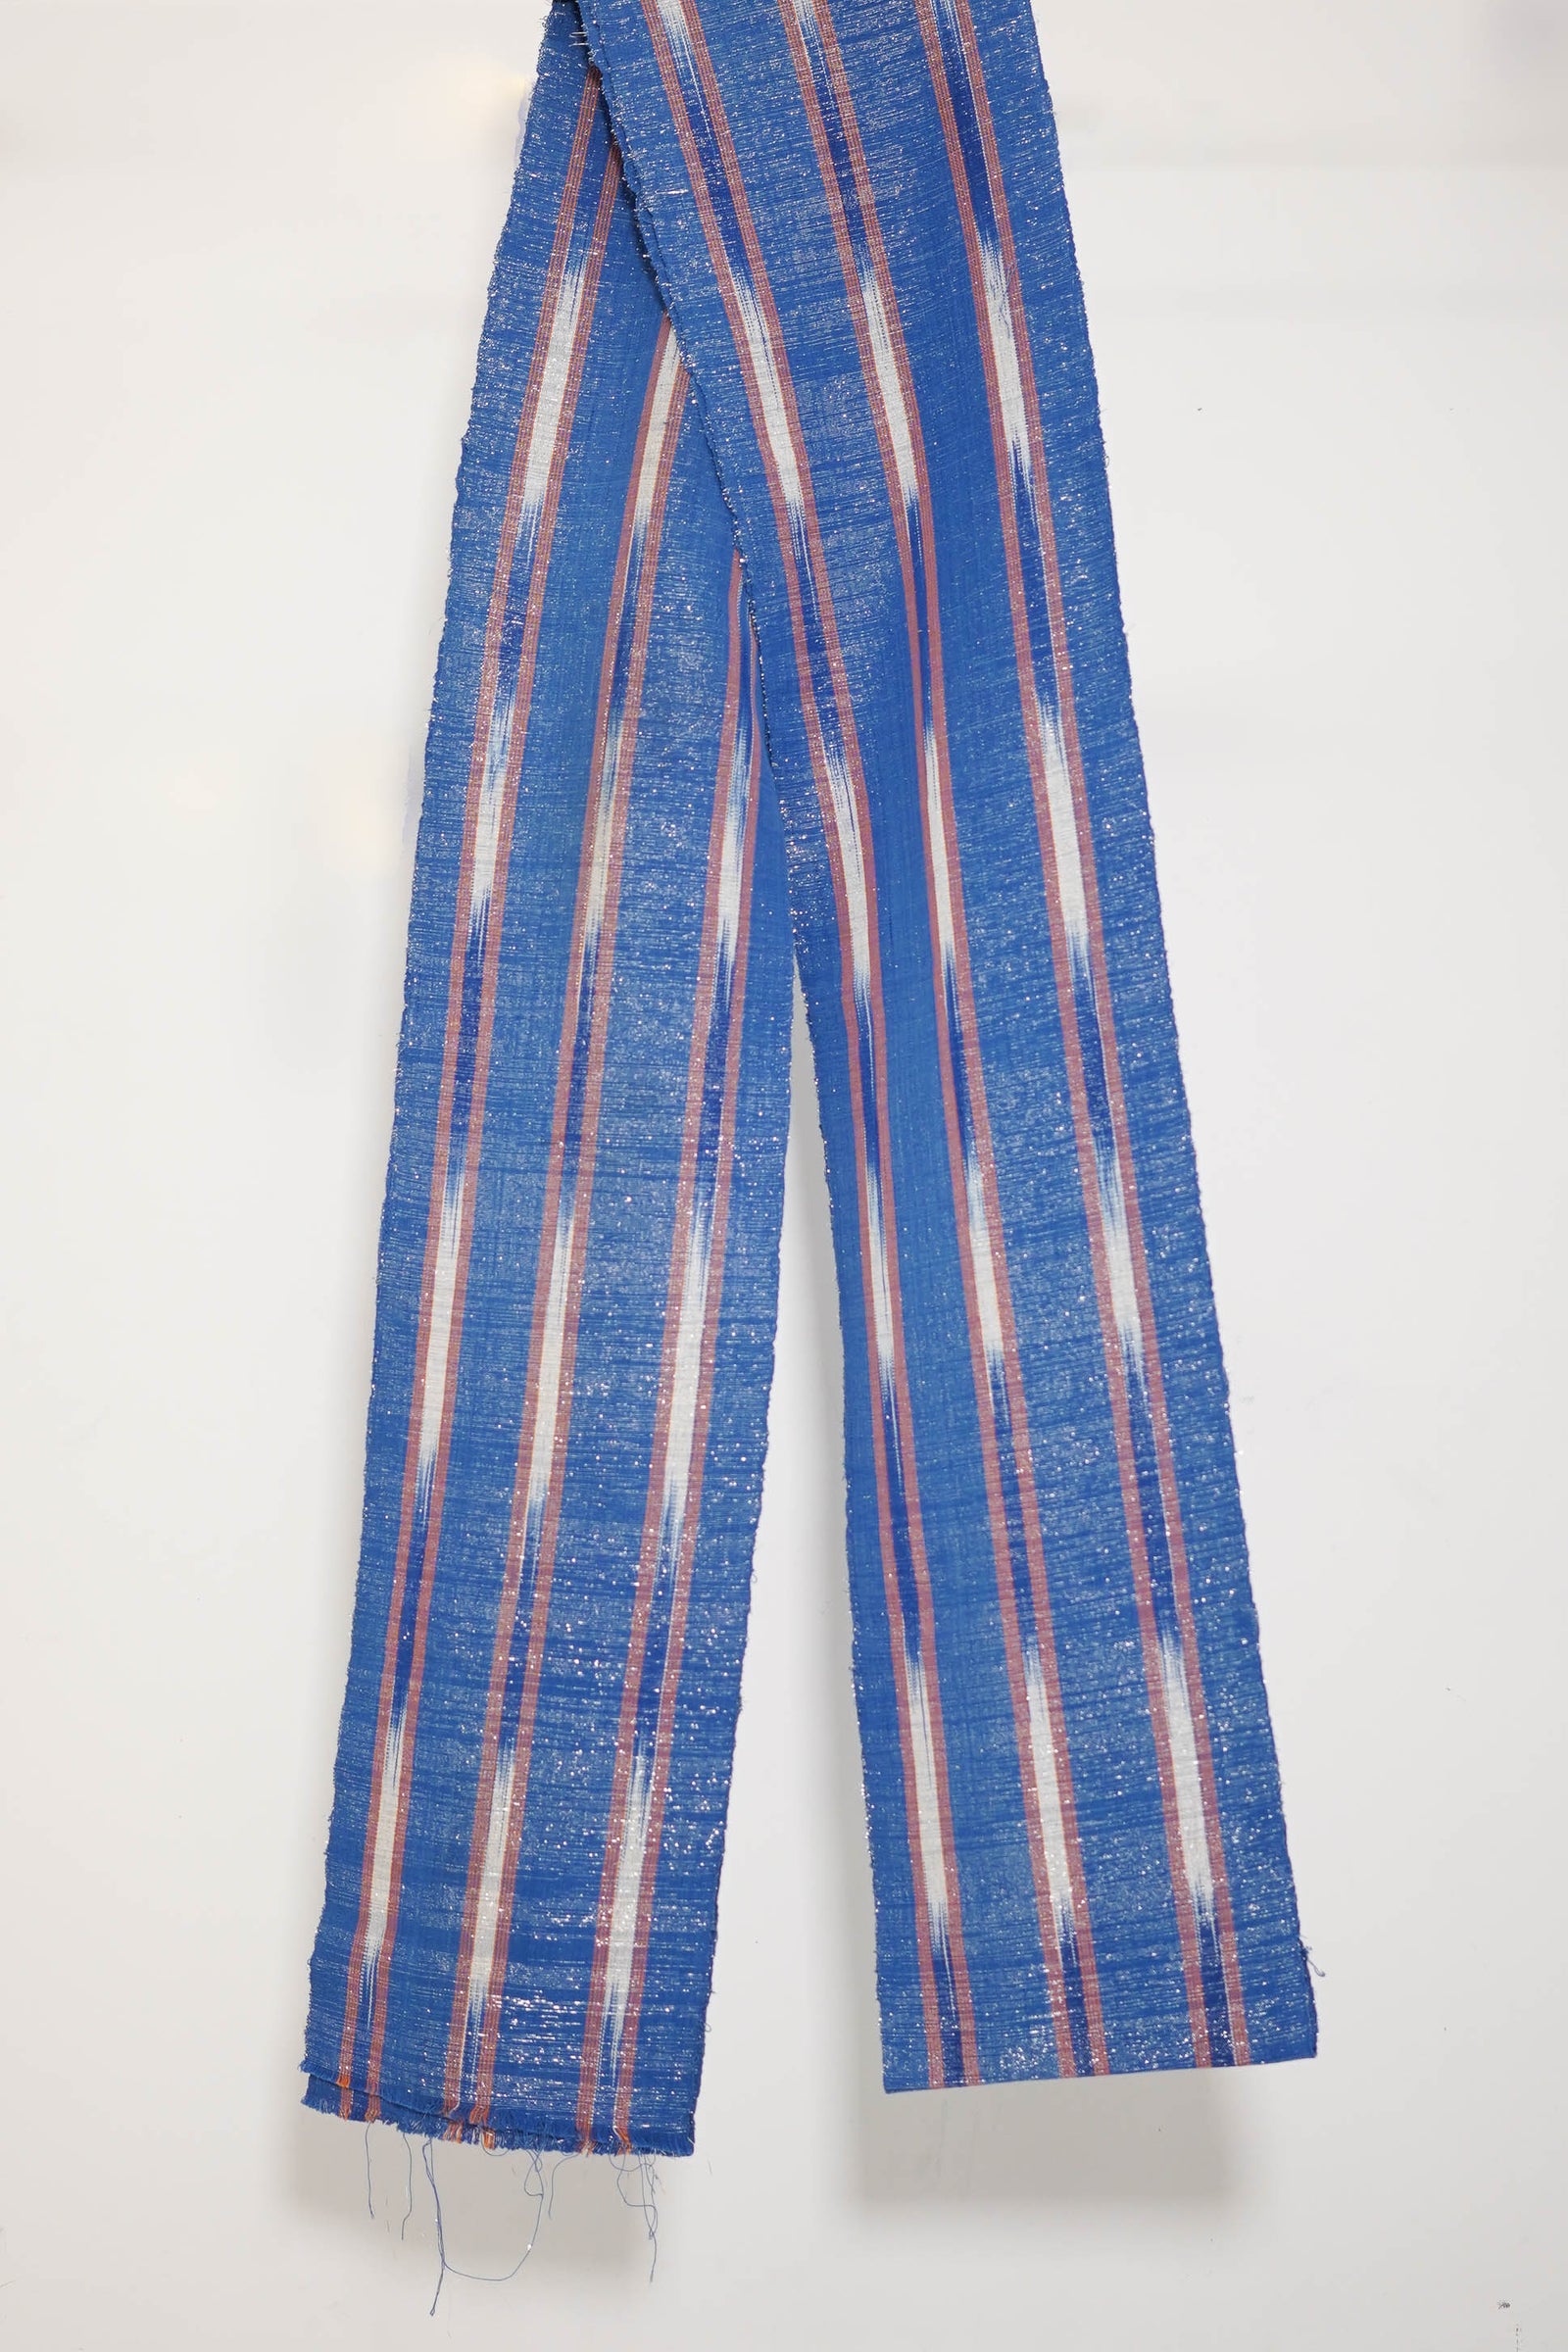 Metallic blue and orange handwoven strip cloth